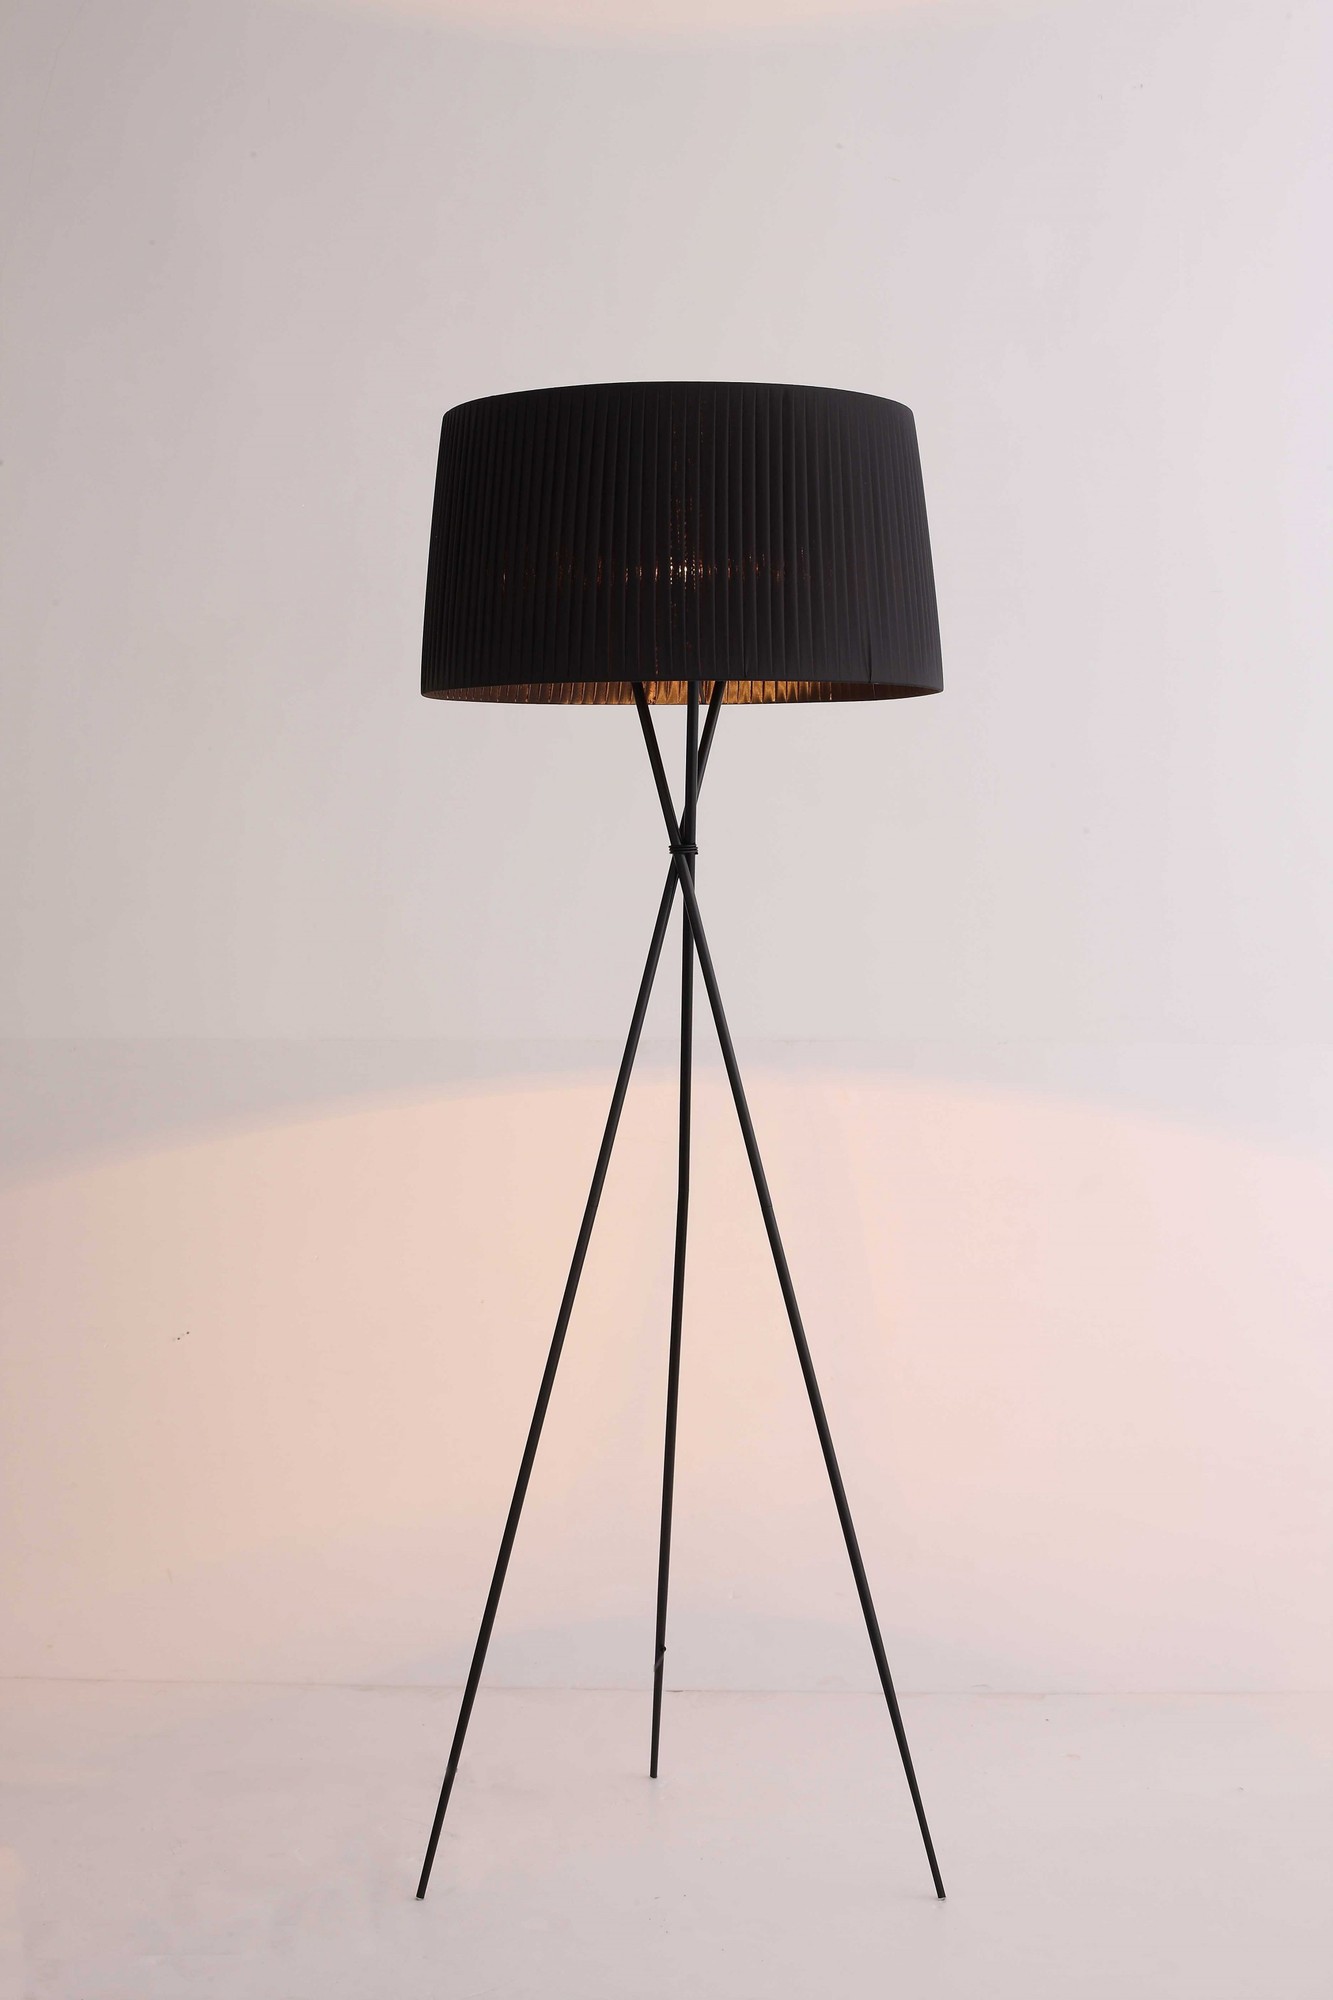 20" X 20" X 69" Black Carbon Floor Lamp